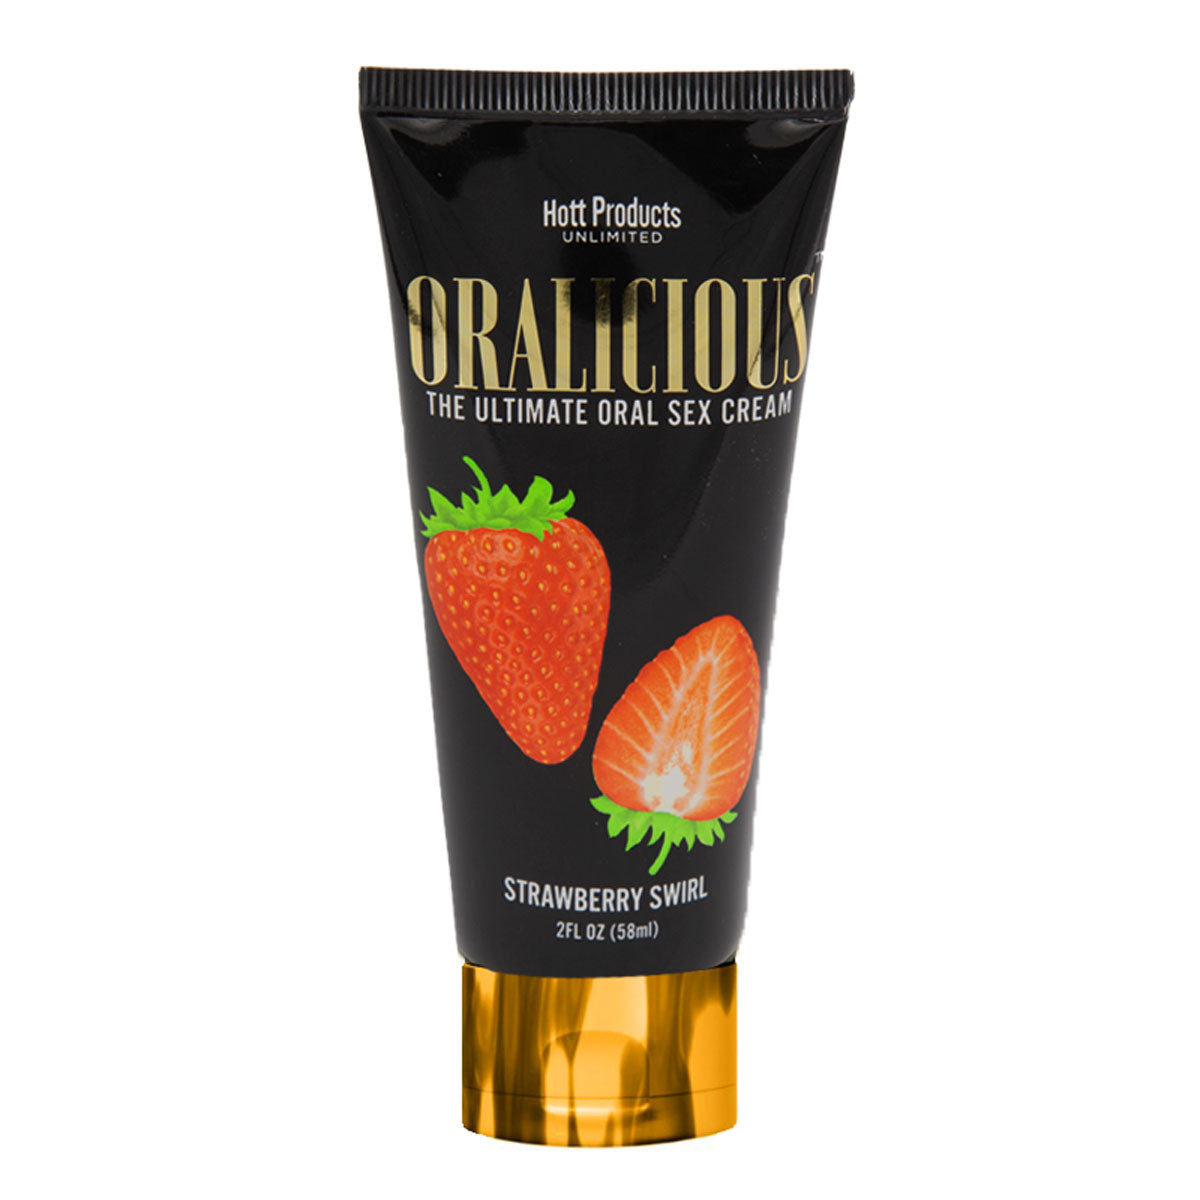 HottProducts Oralicious Oral Sex Cream - Strawberry Swirl